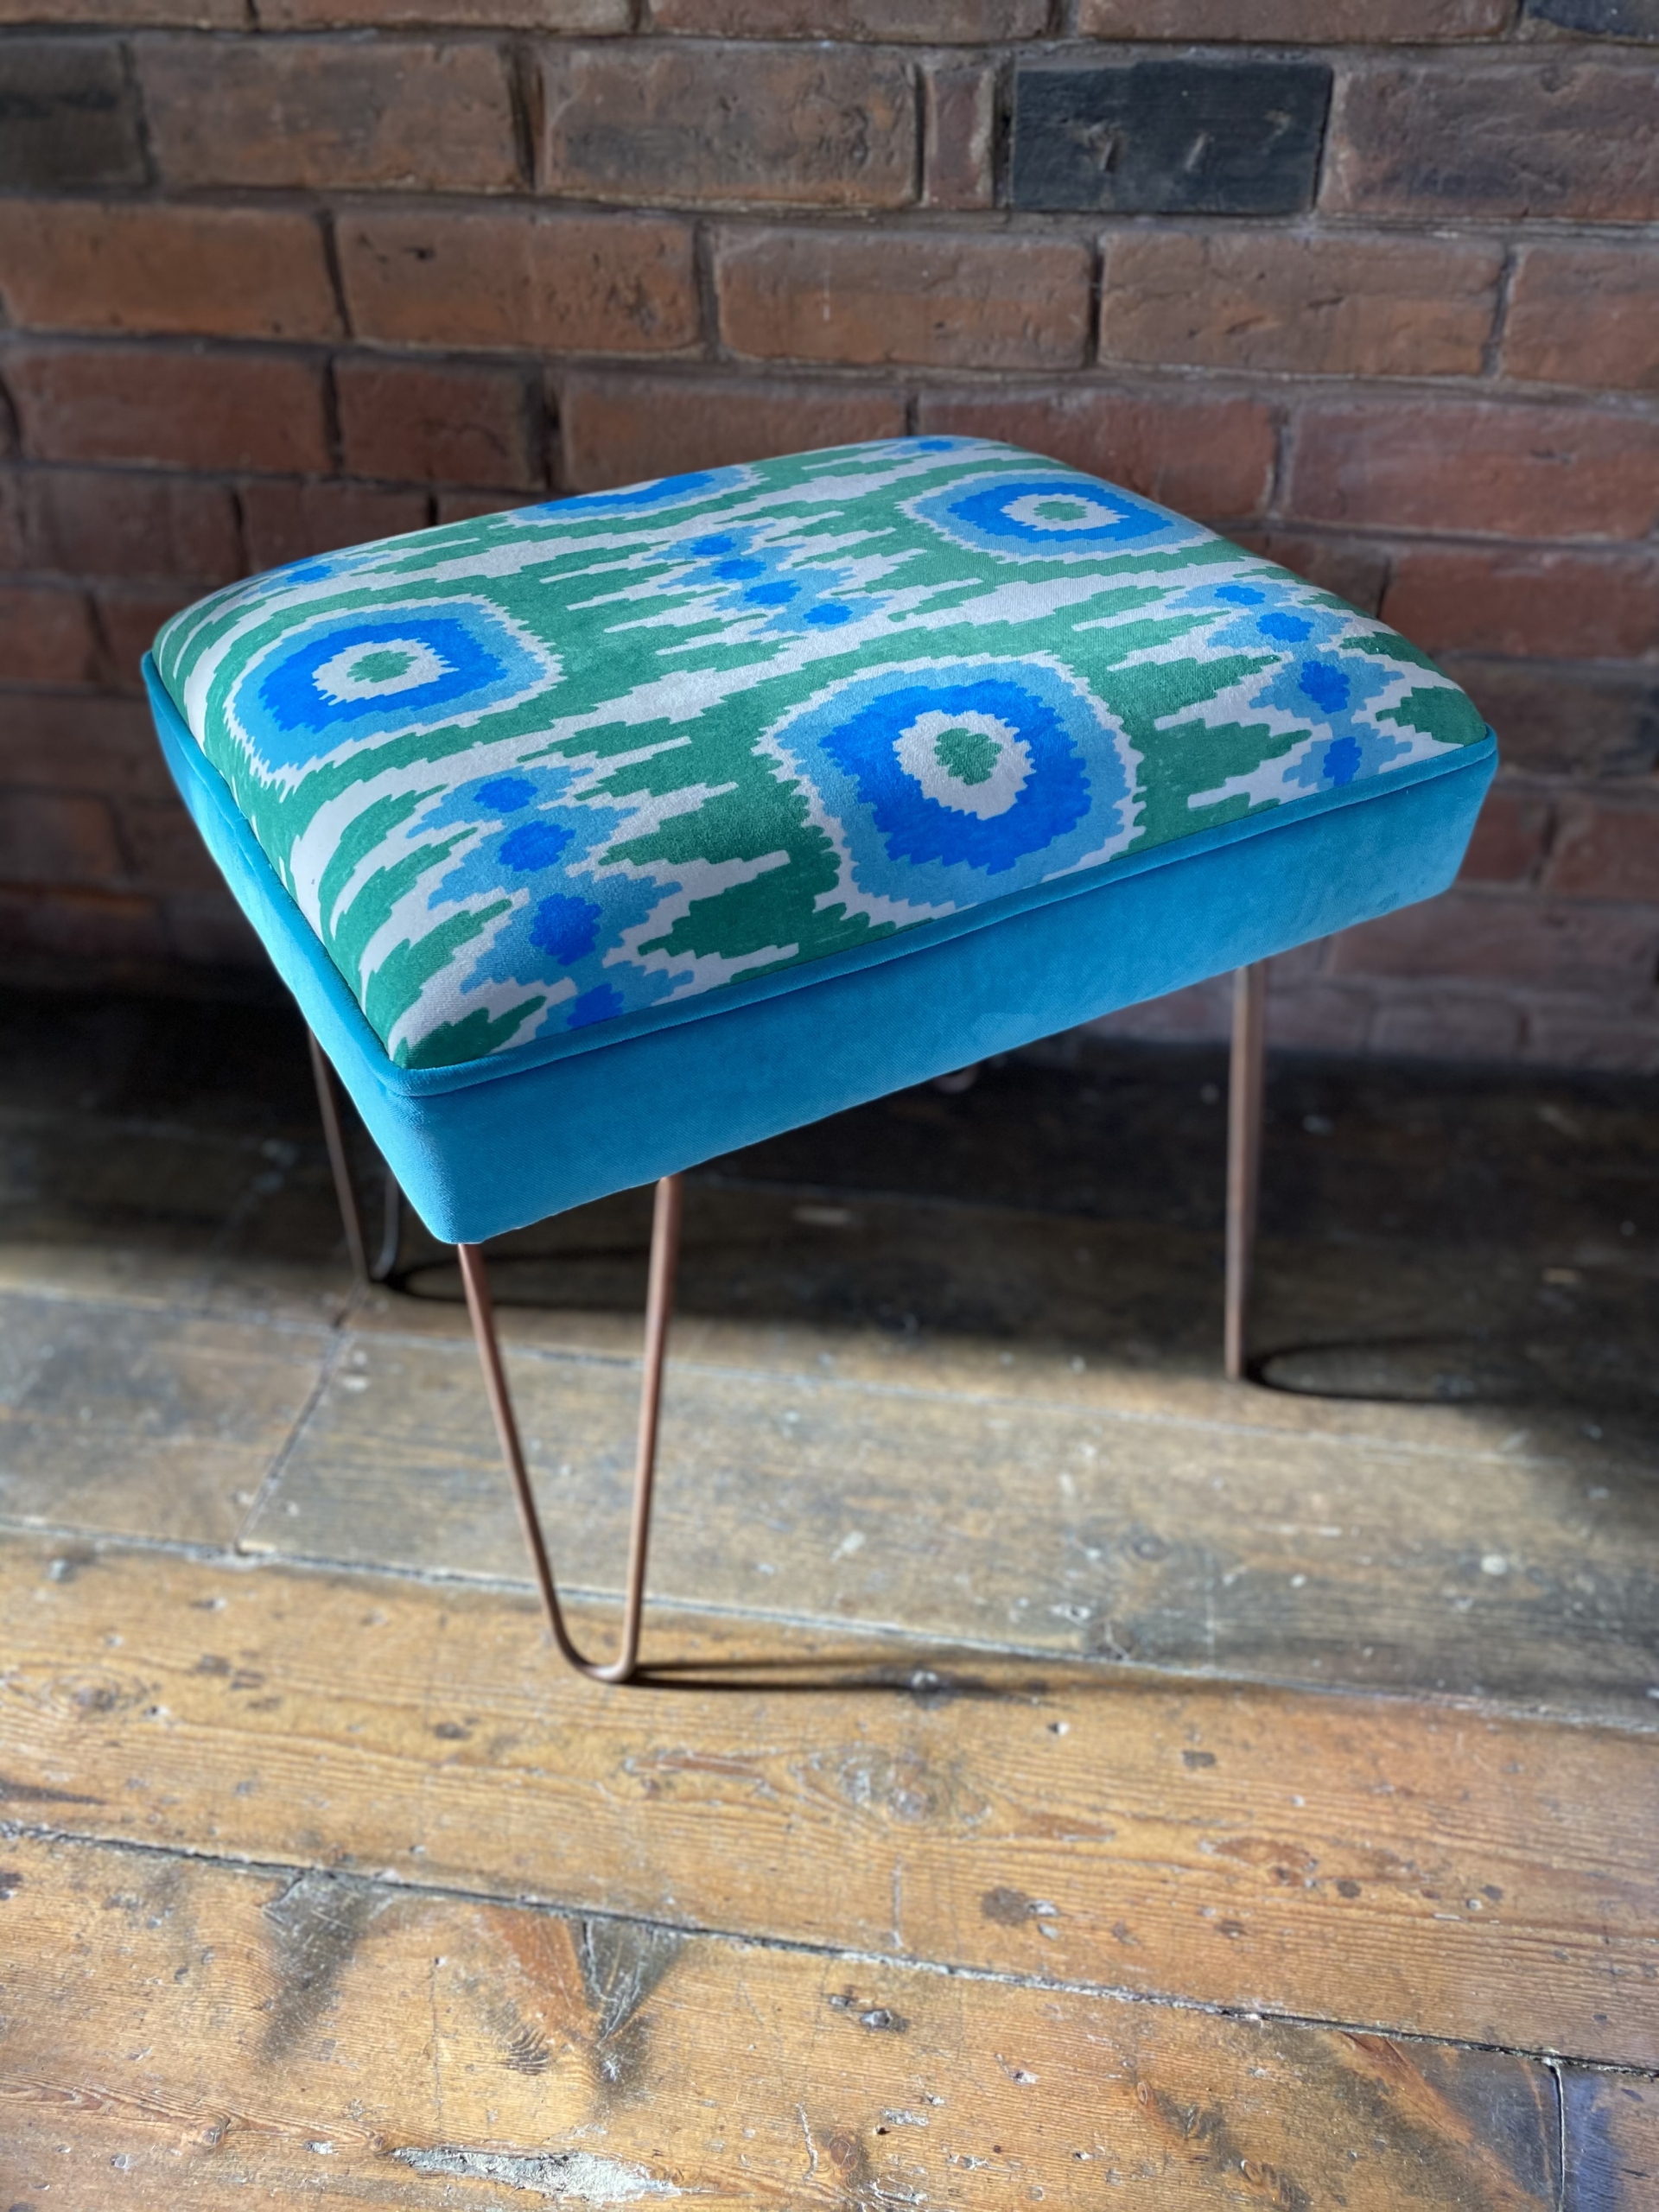 Single lining on upholstery stool